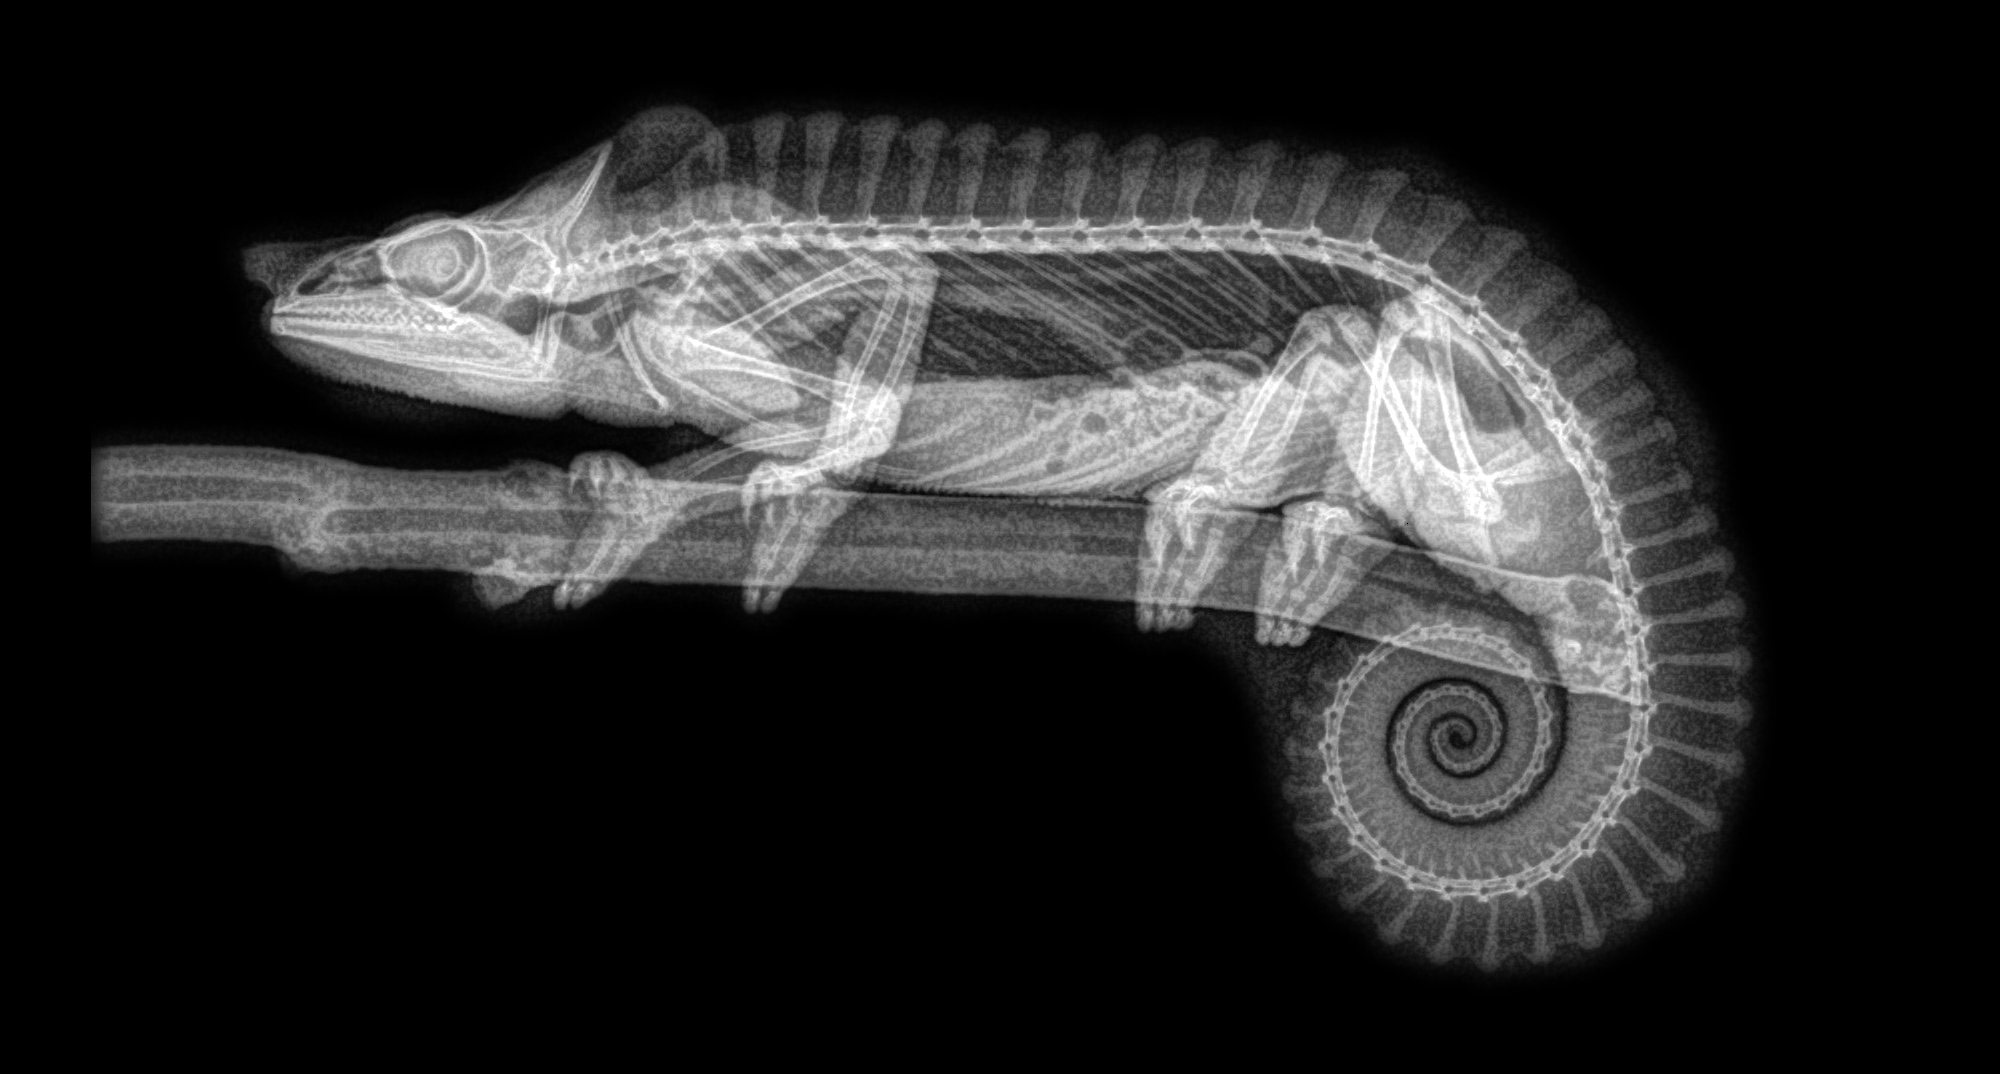 General 2000x1074 nature animals black background branch chameleons x-rays monochrome spine bones transparency